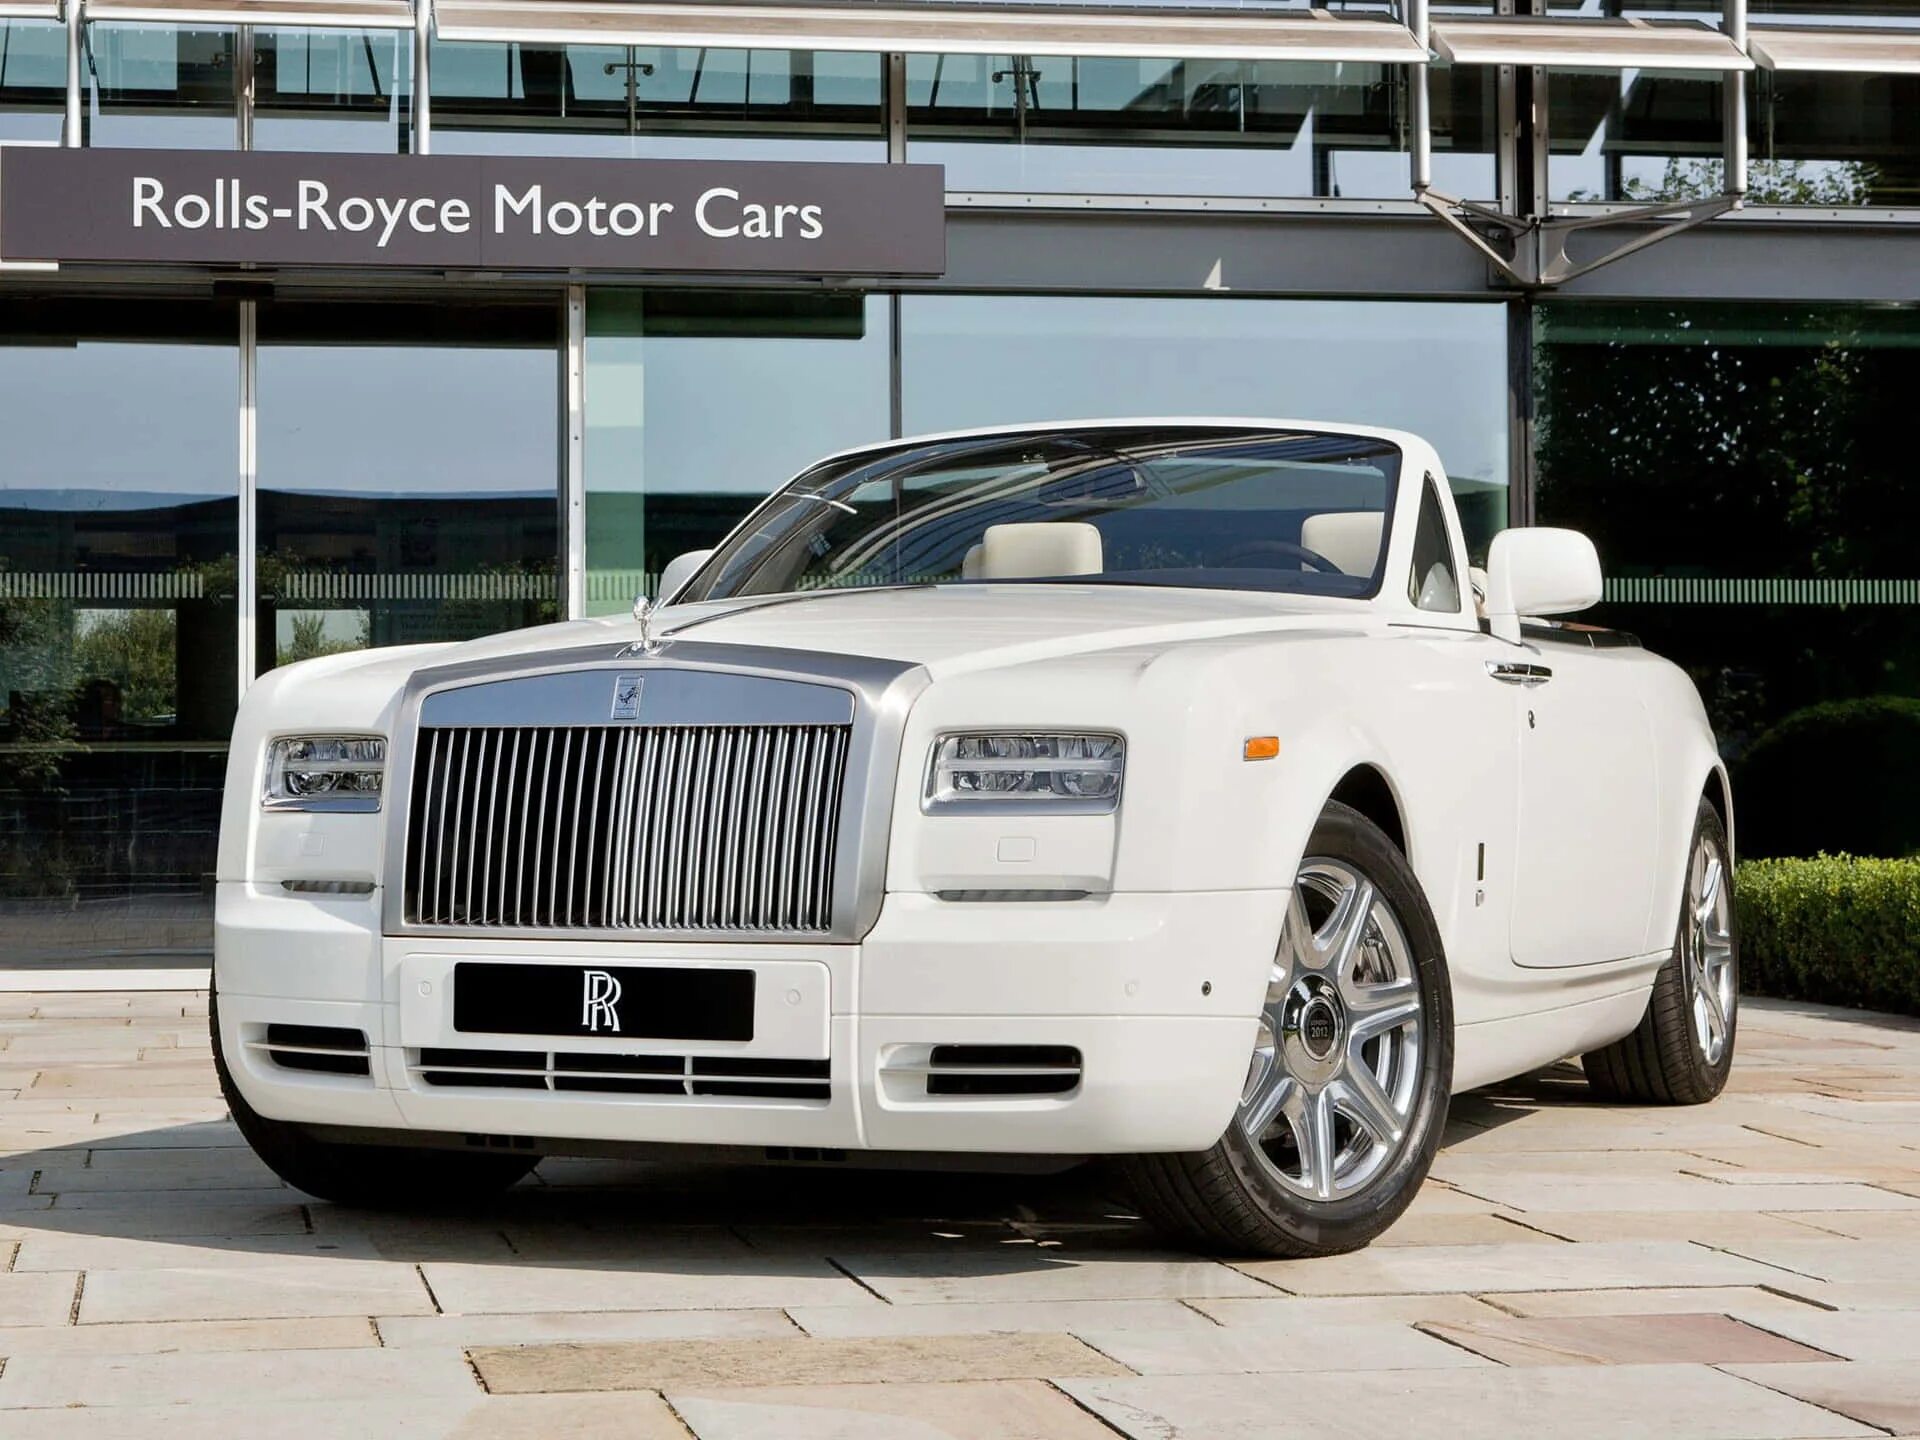 Rolls com. 2012 Rolls-Royce Phantom Drophead Coupe. Rolls Royce Phantom 7. Rolls Royce Phantom Coupe White. Роллс Ройс Фантом Дропхед купе.